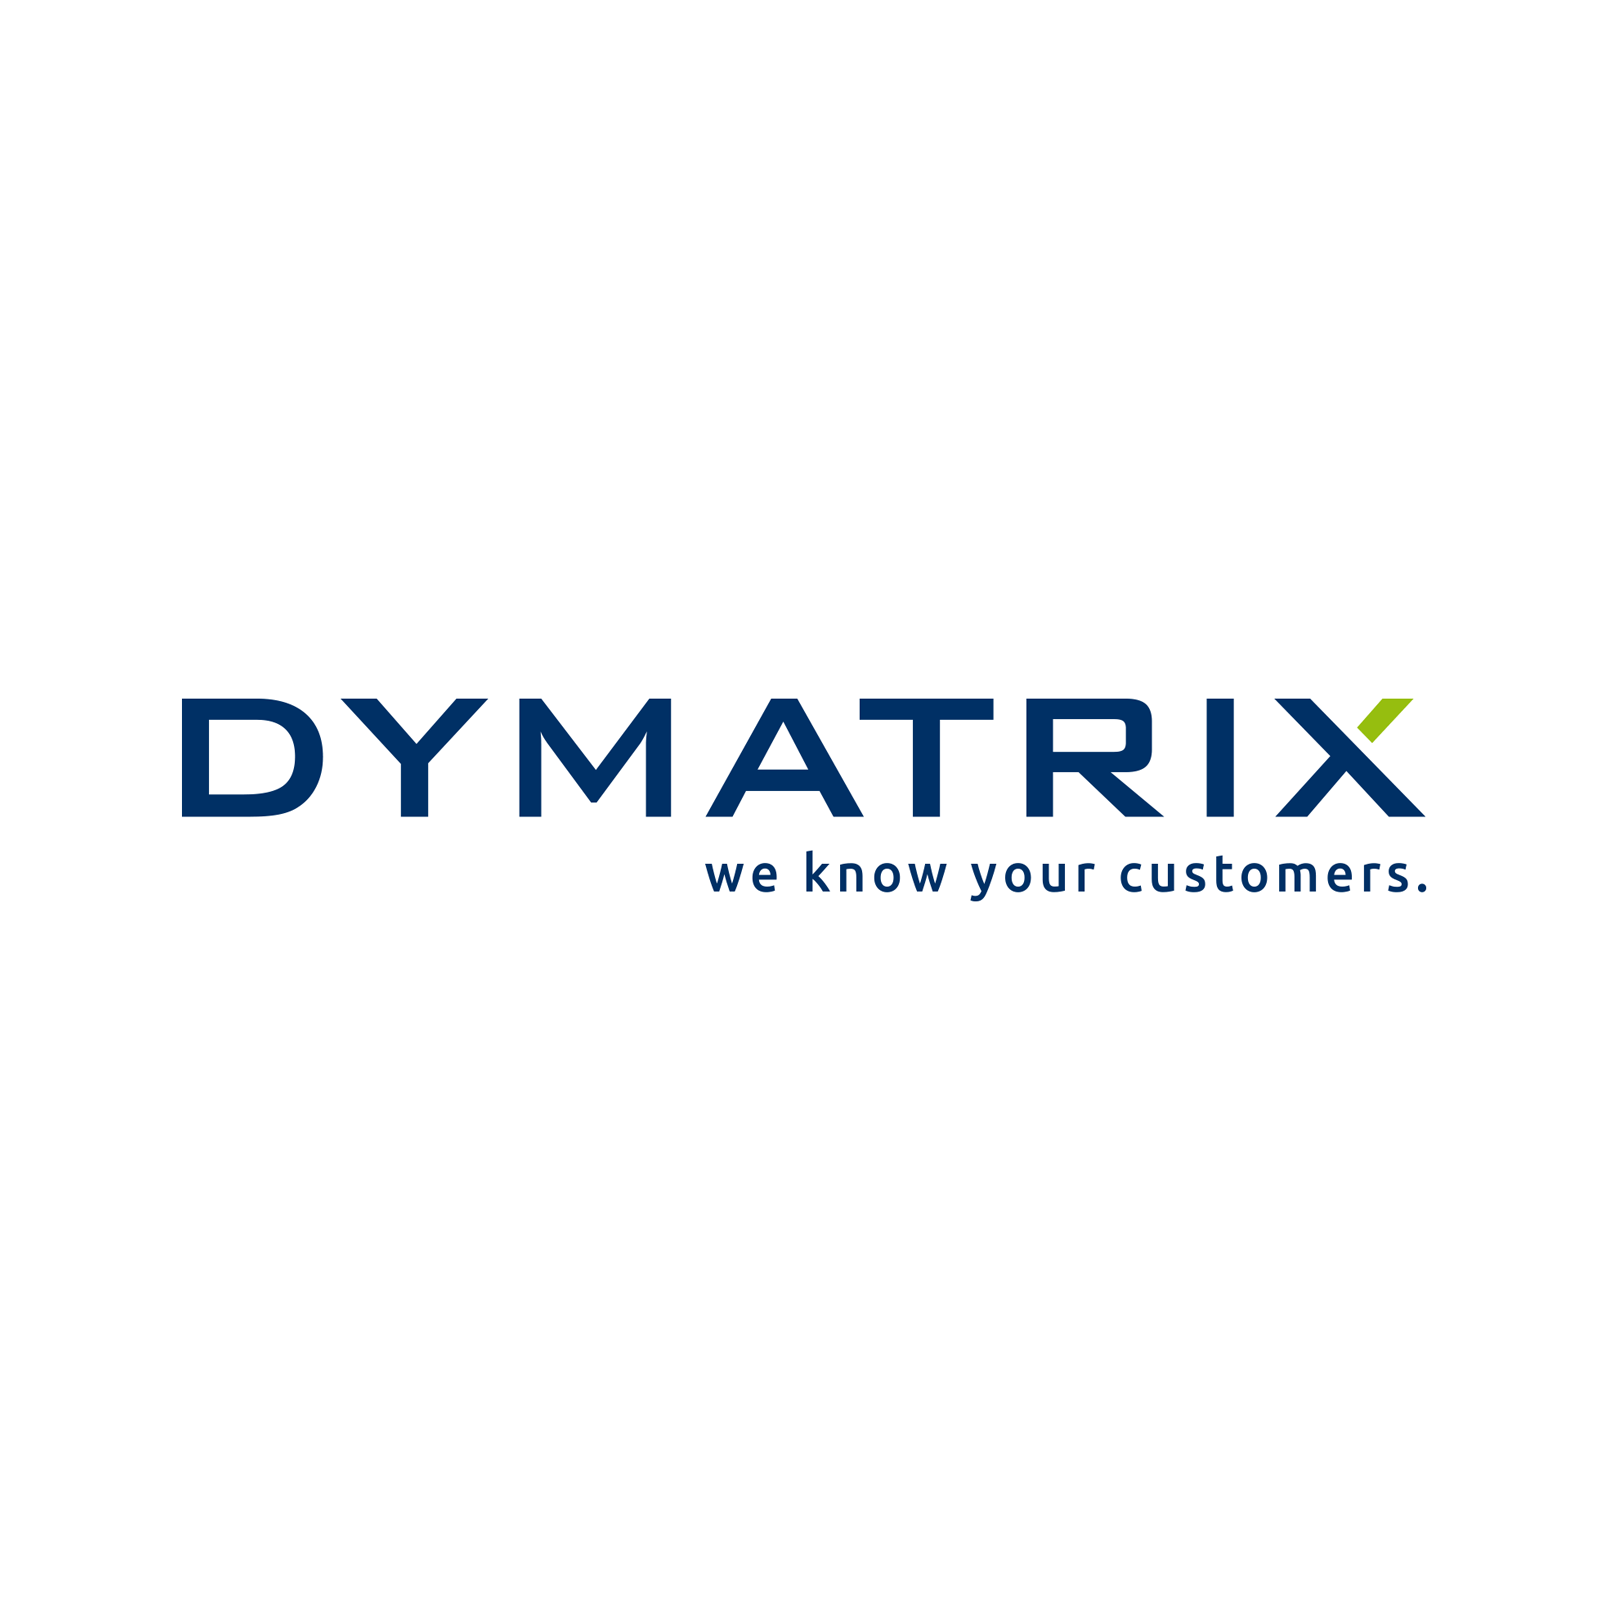 DYMATRIX Consulting Group GmbH